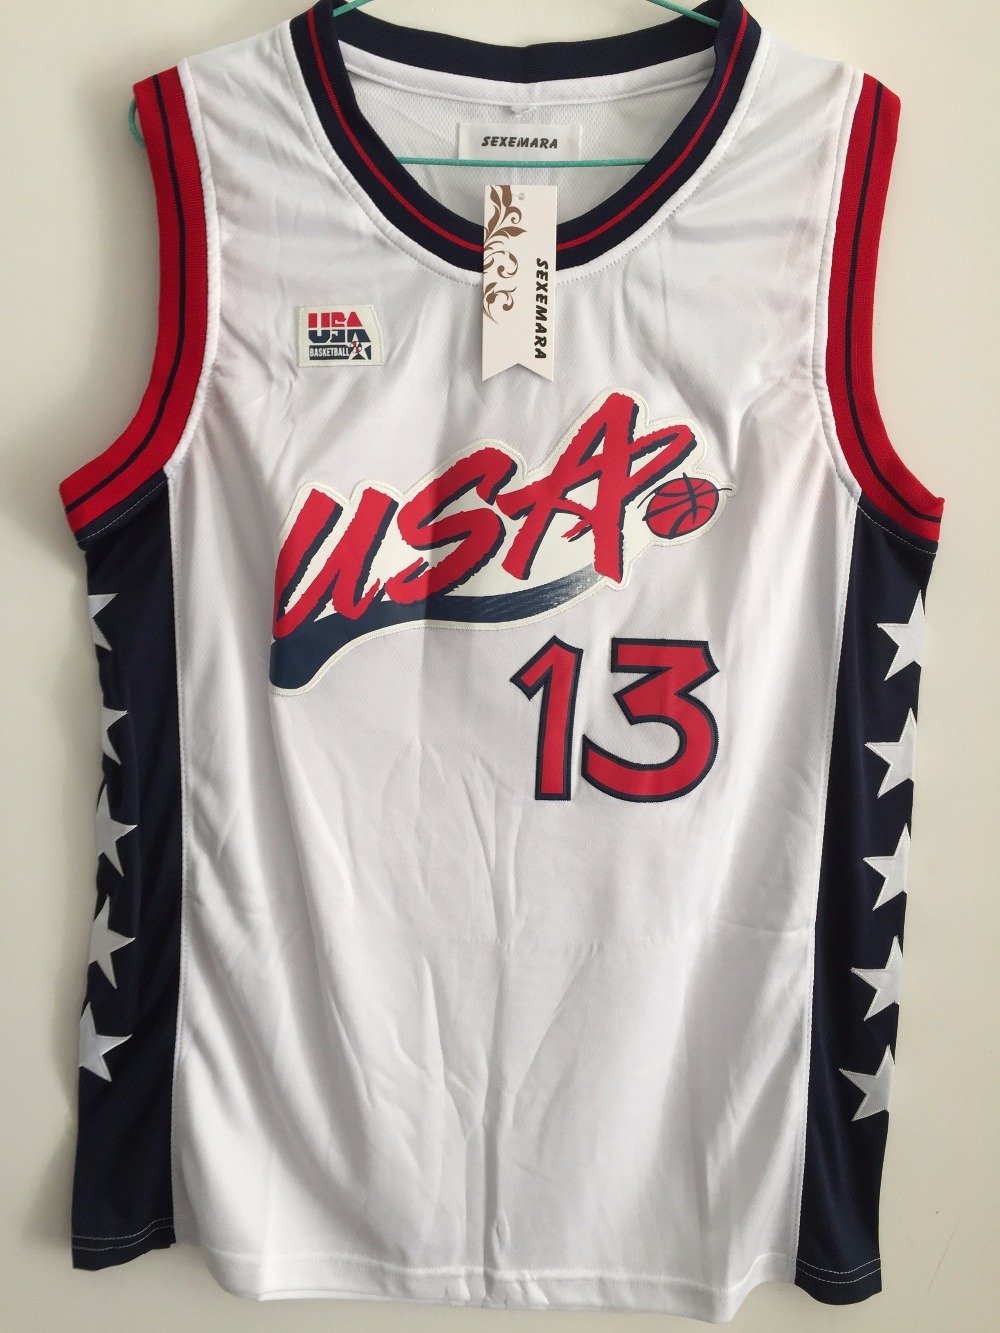 Shaquille O'Neal #13 1996 USA Basketball Jersey Stitched Sewn White